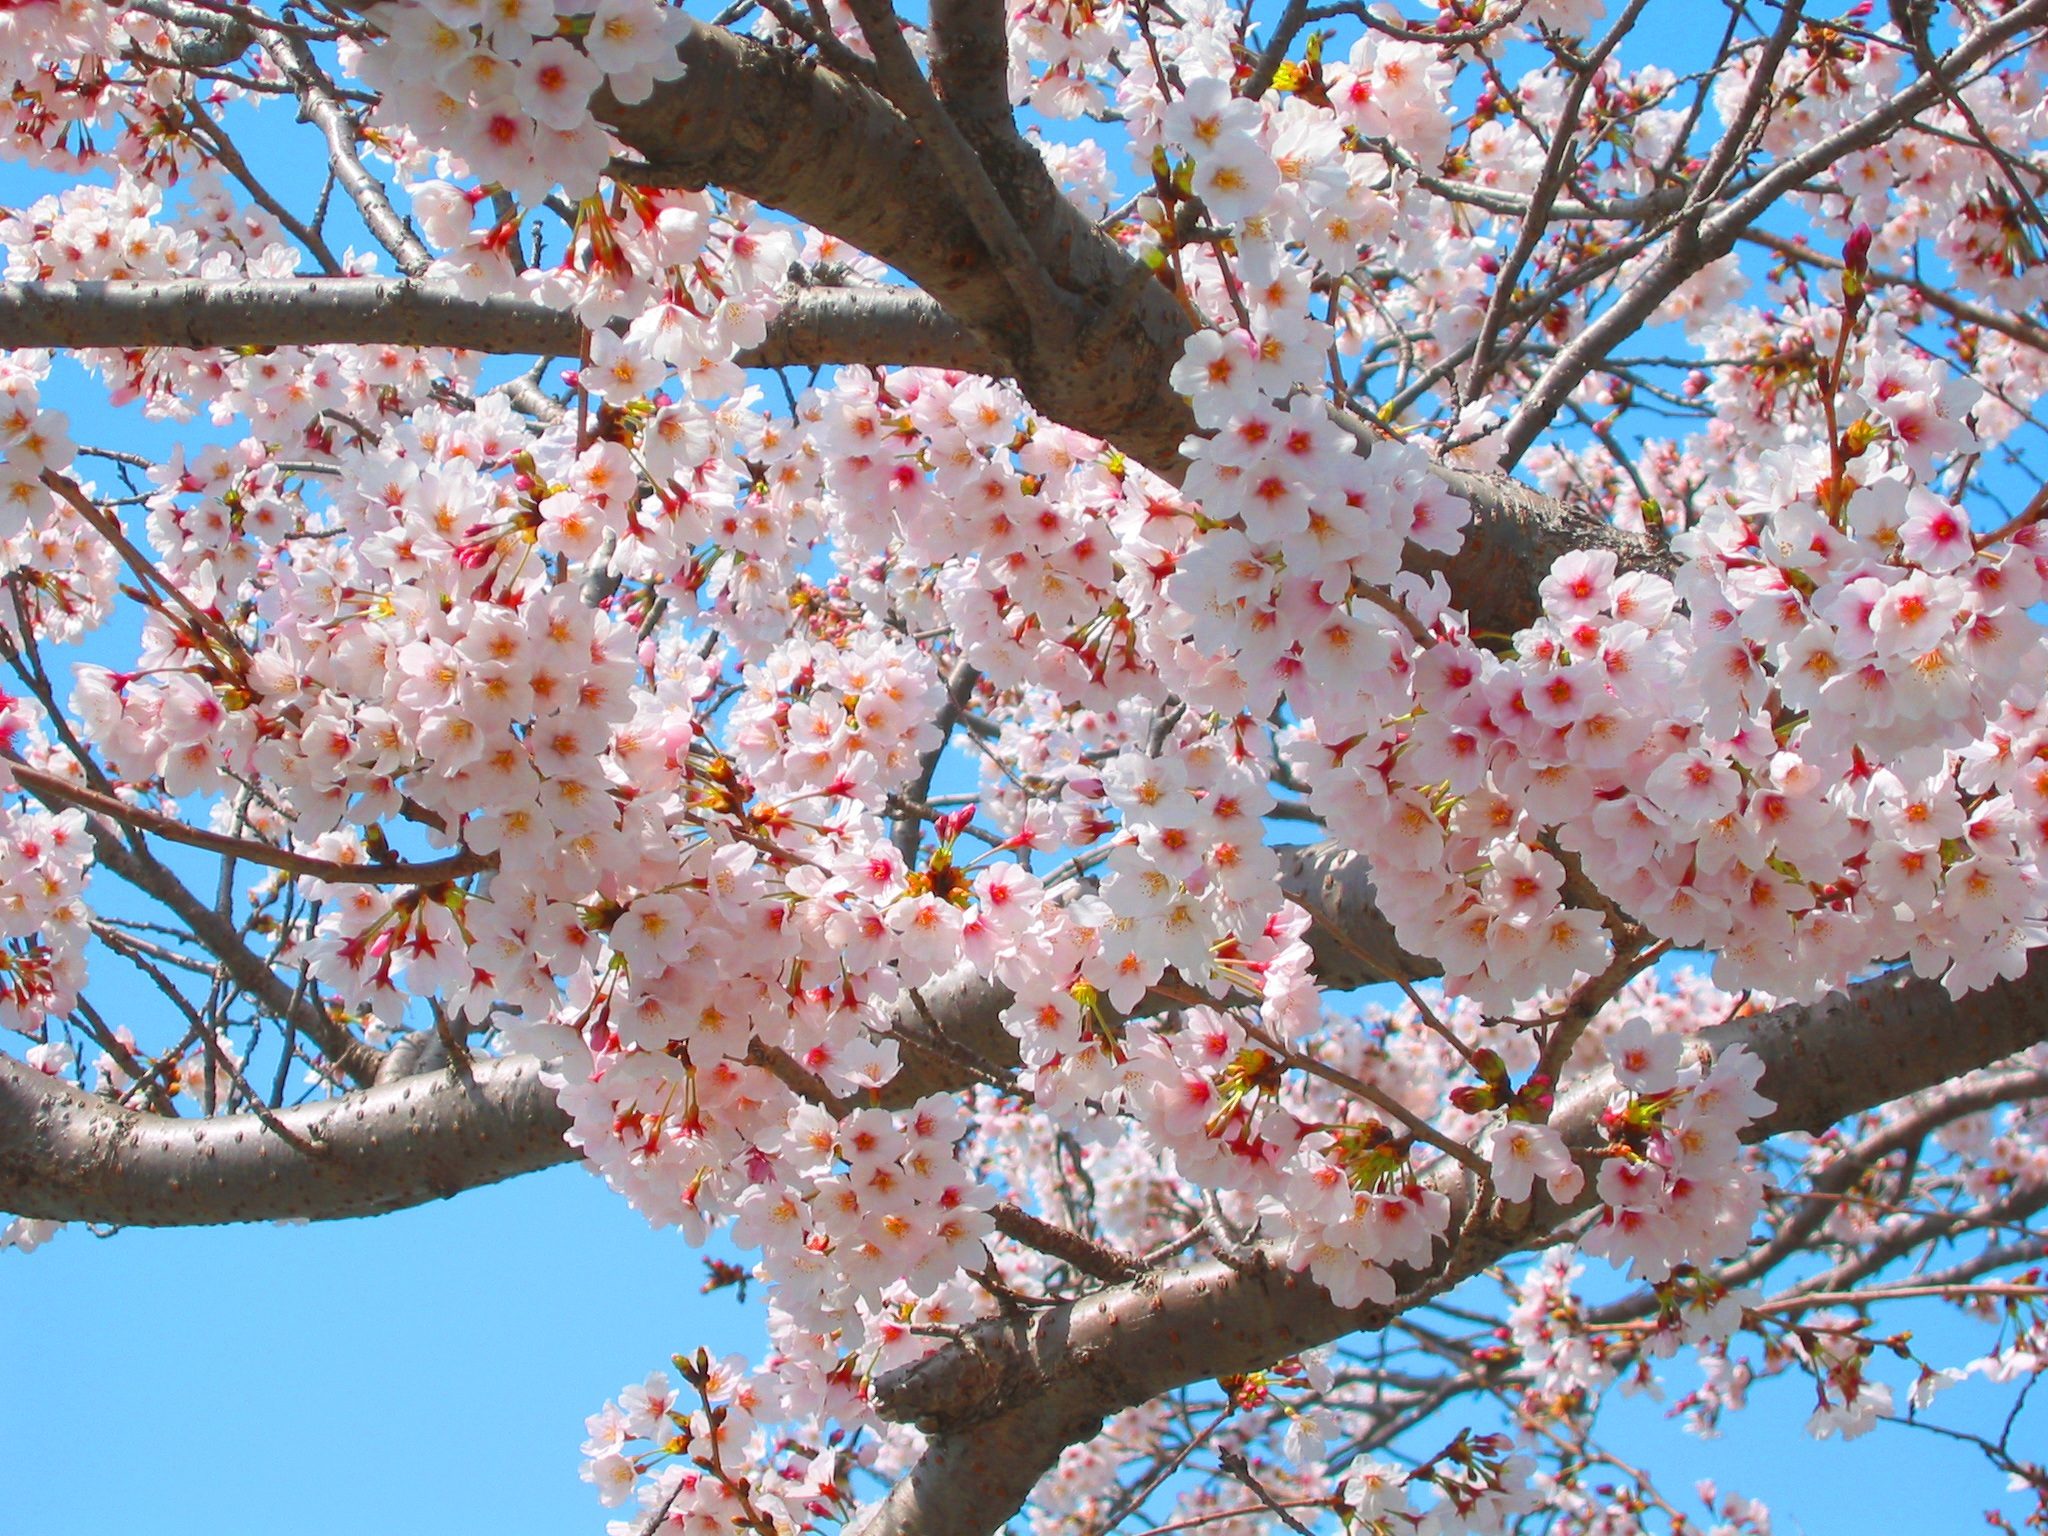 tree-branch-blossom-plant-flower-food-spring-produce-natural-pink-japan-season-cherry-blossom-flowers-sakura-spring-flowers-cherry-k-views-of-japan-cherry-blossoms-japan-flower-1383591-6456844